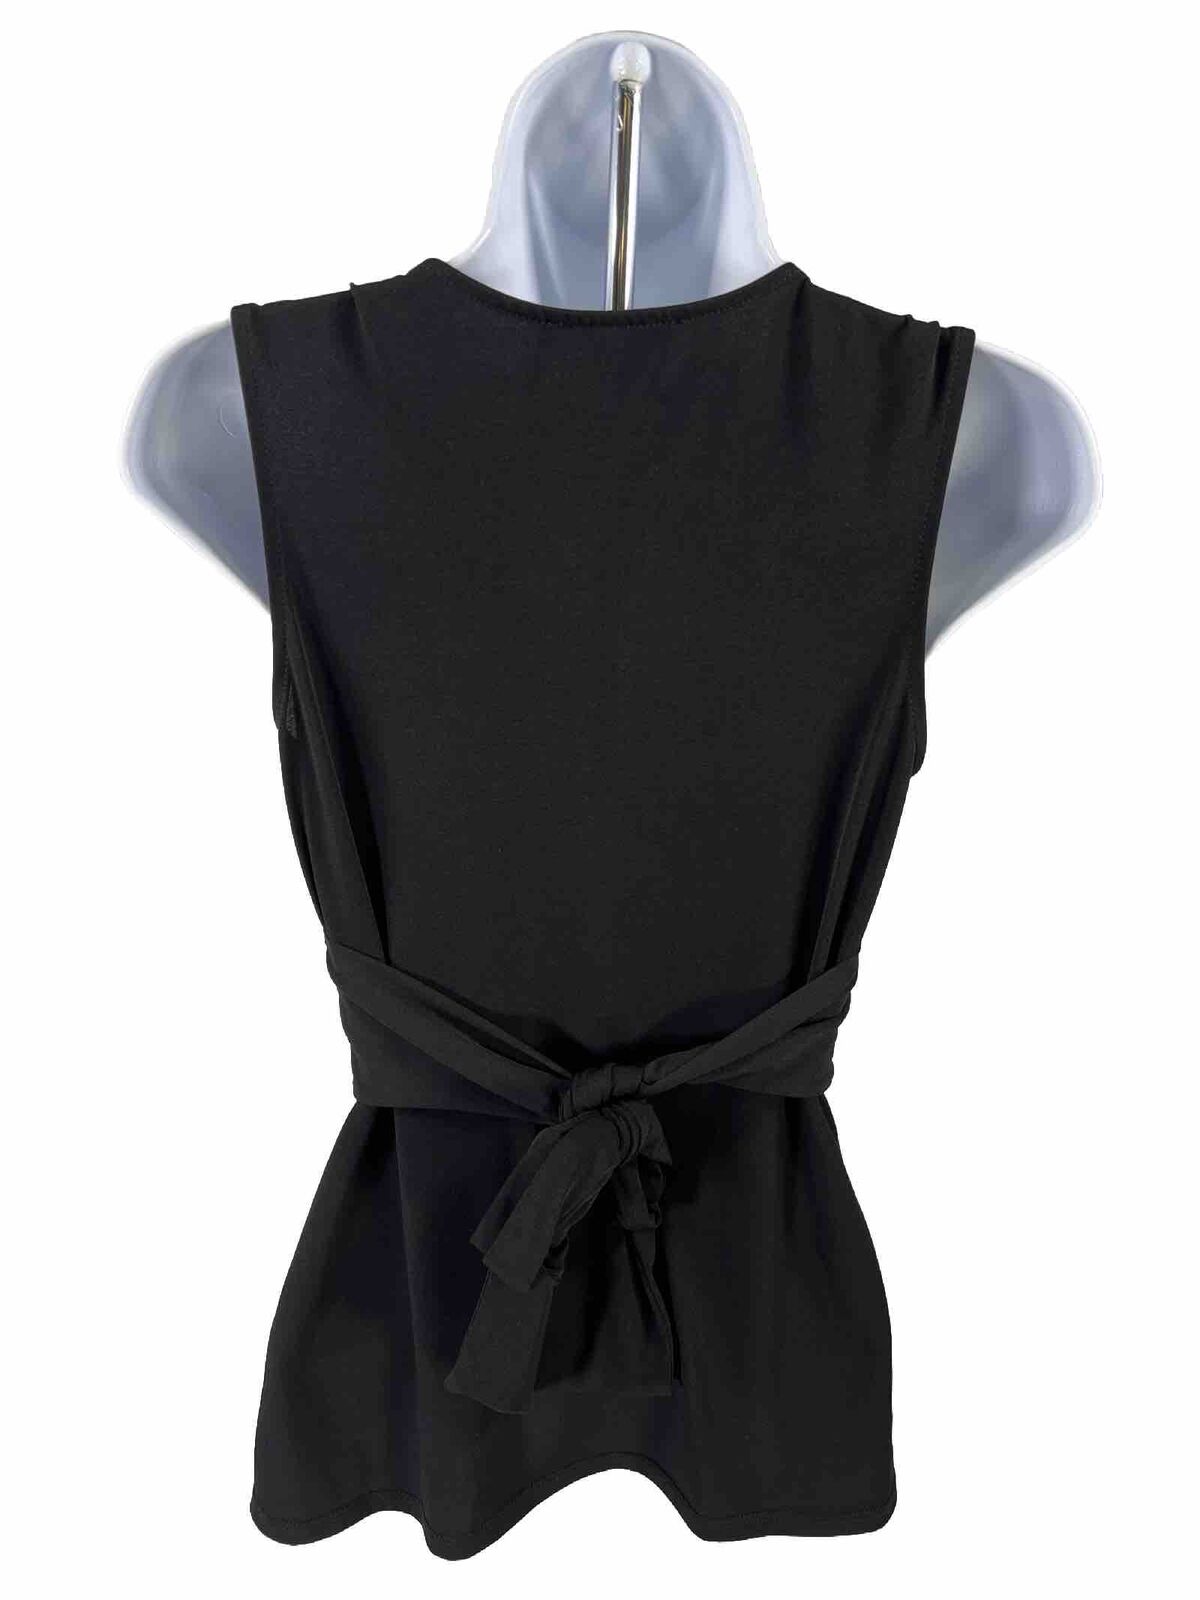 White House Black Market Women's Black Sequin Tie Sleeveless Top - XS